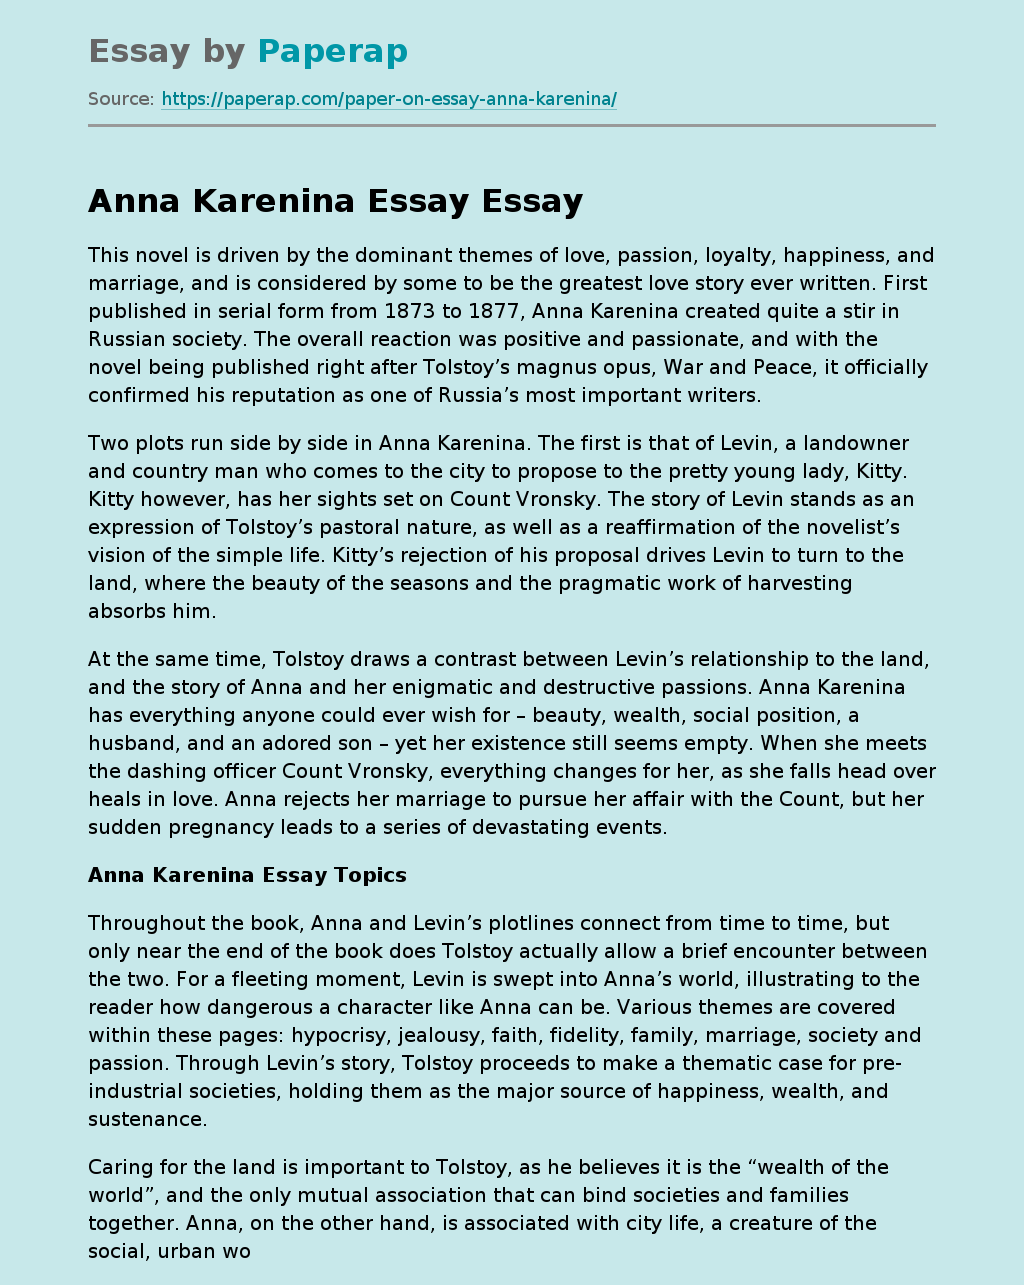 Anna Karenina Essay